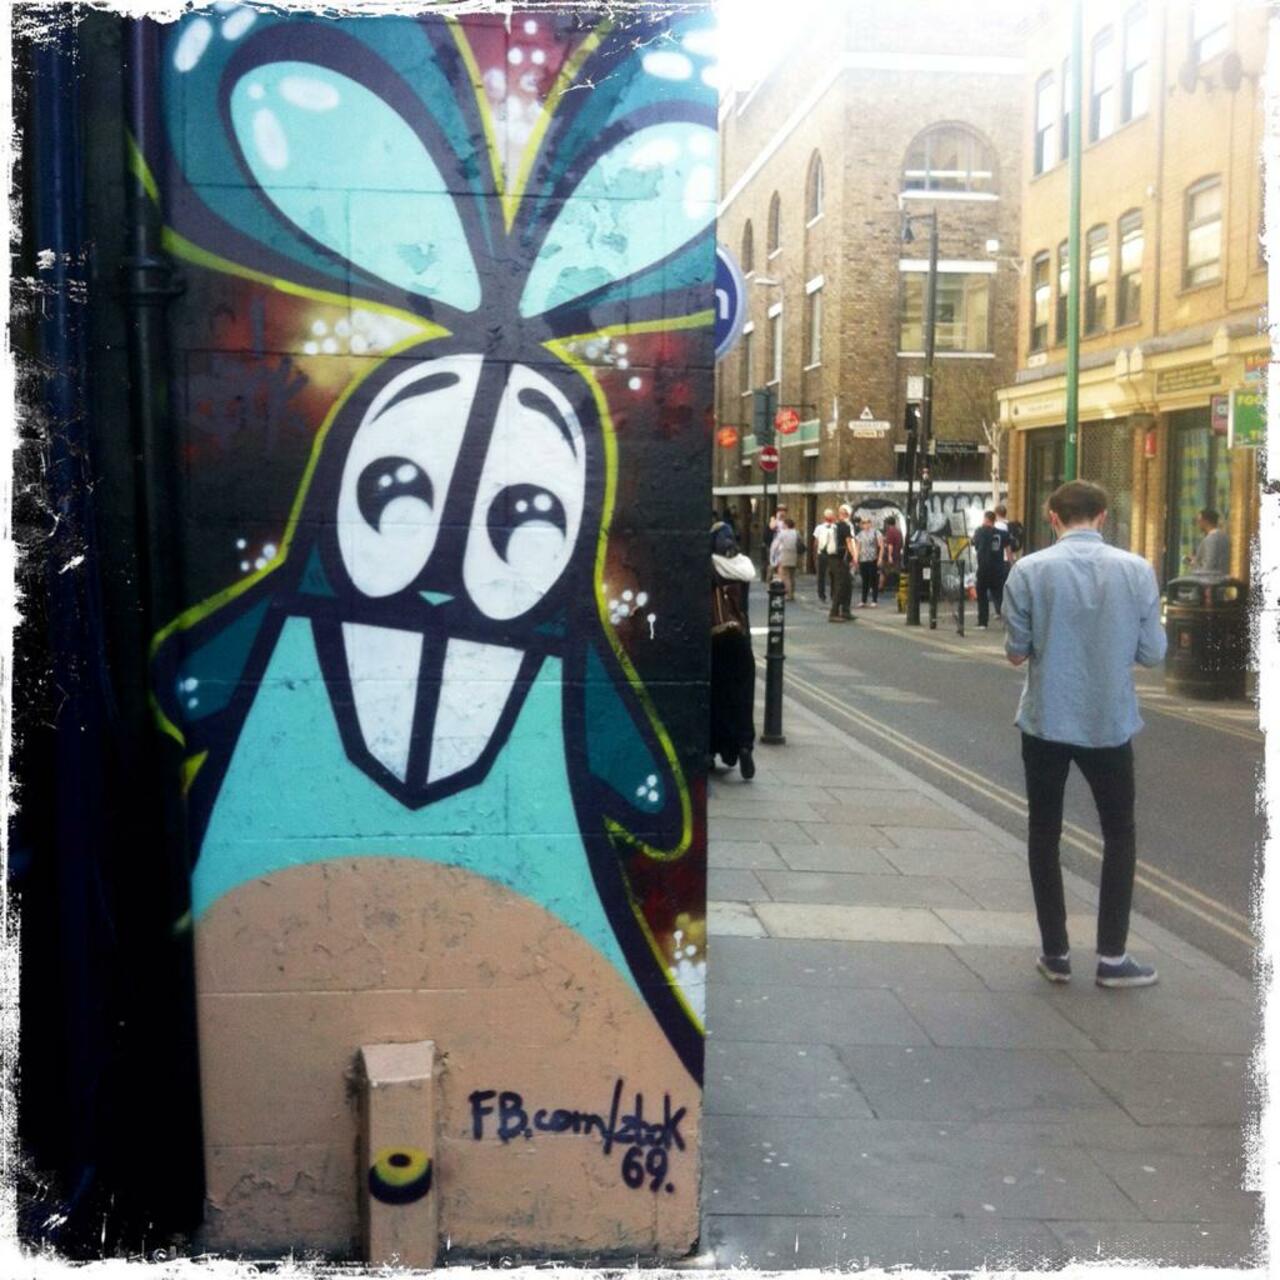 Rabbit.. New work on Brick Lane from #Zbok69 

#art #streetart @E1BrickLane #graffiti http://t.co/6WTkmBgvQf